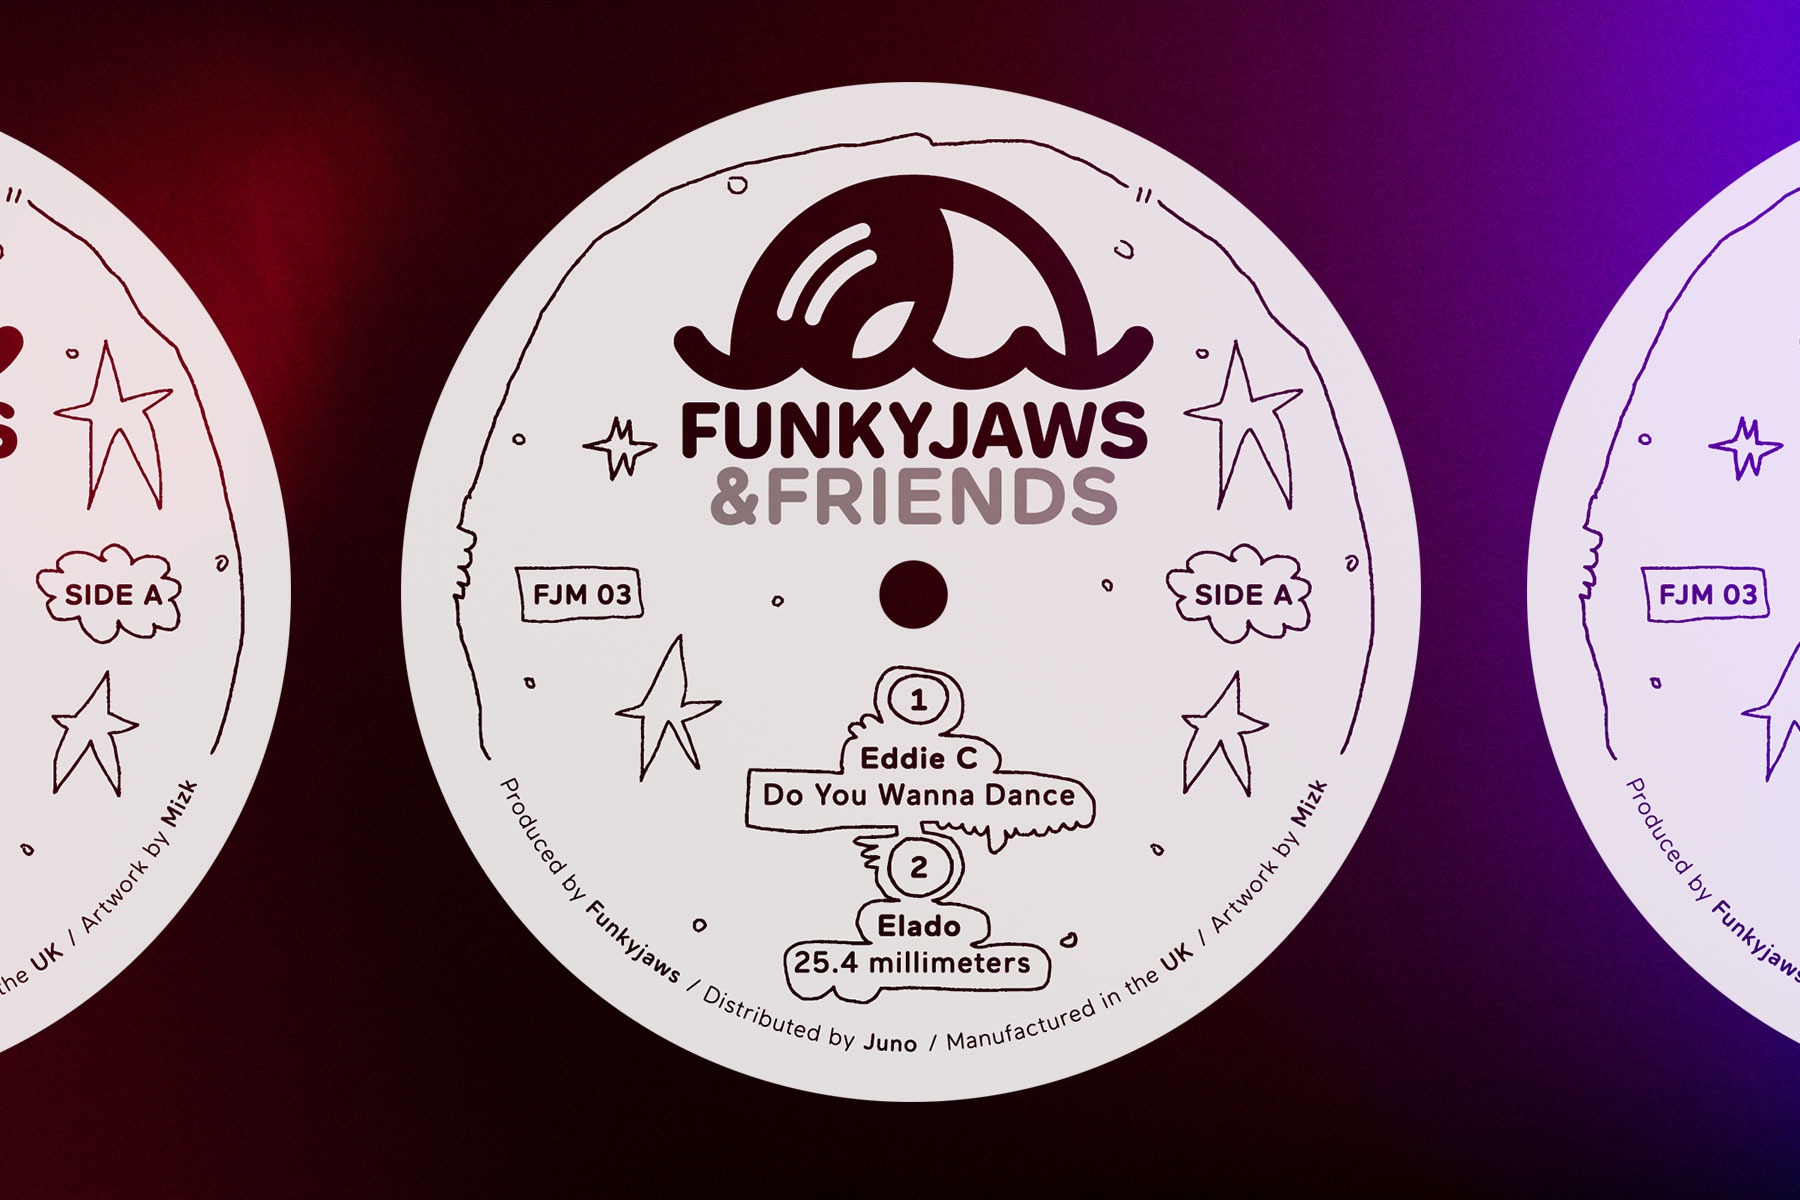 Funkyjaws and Friends album art